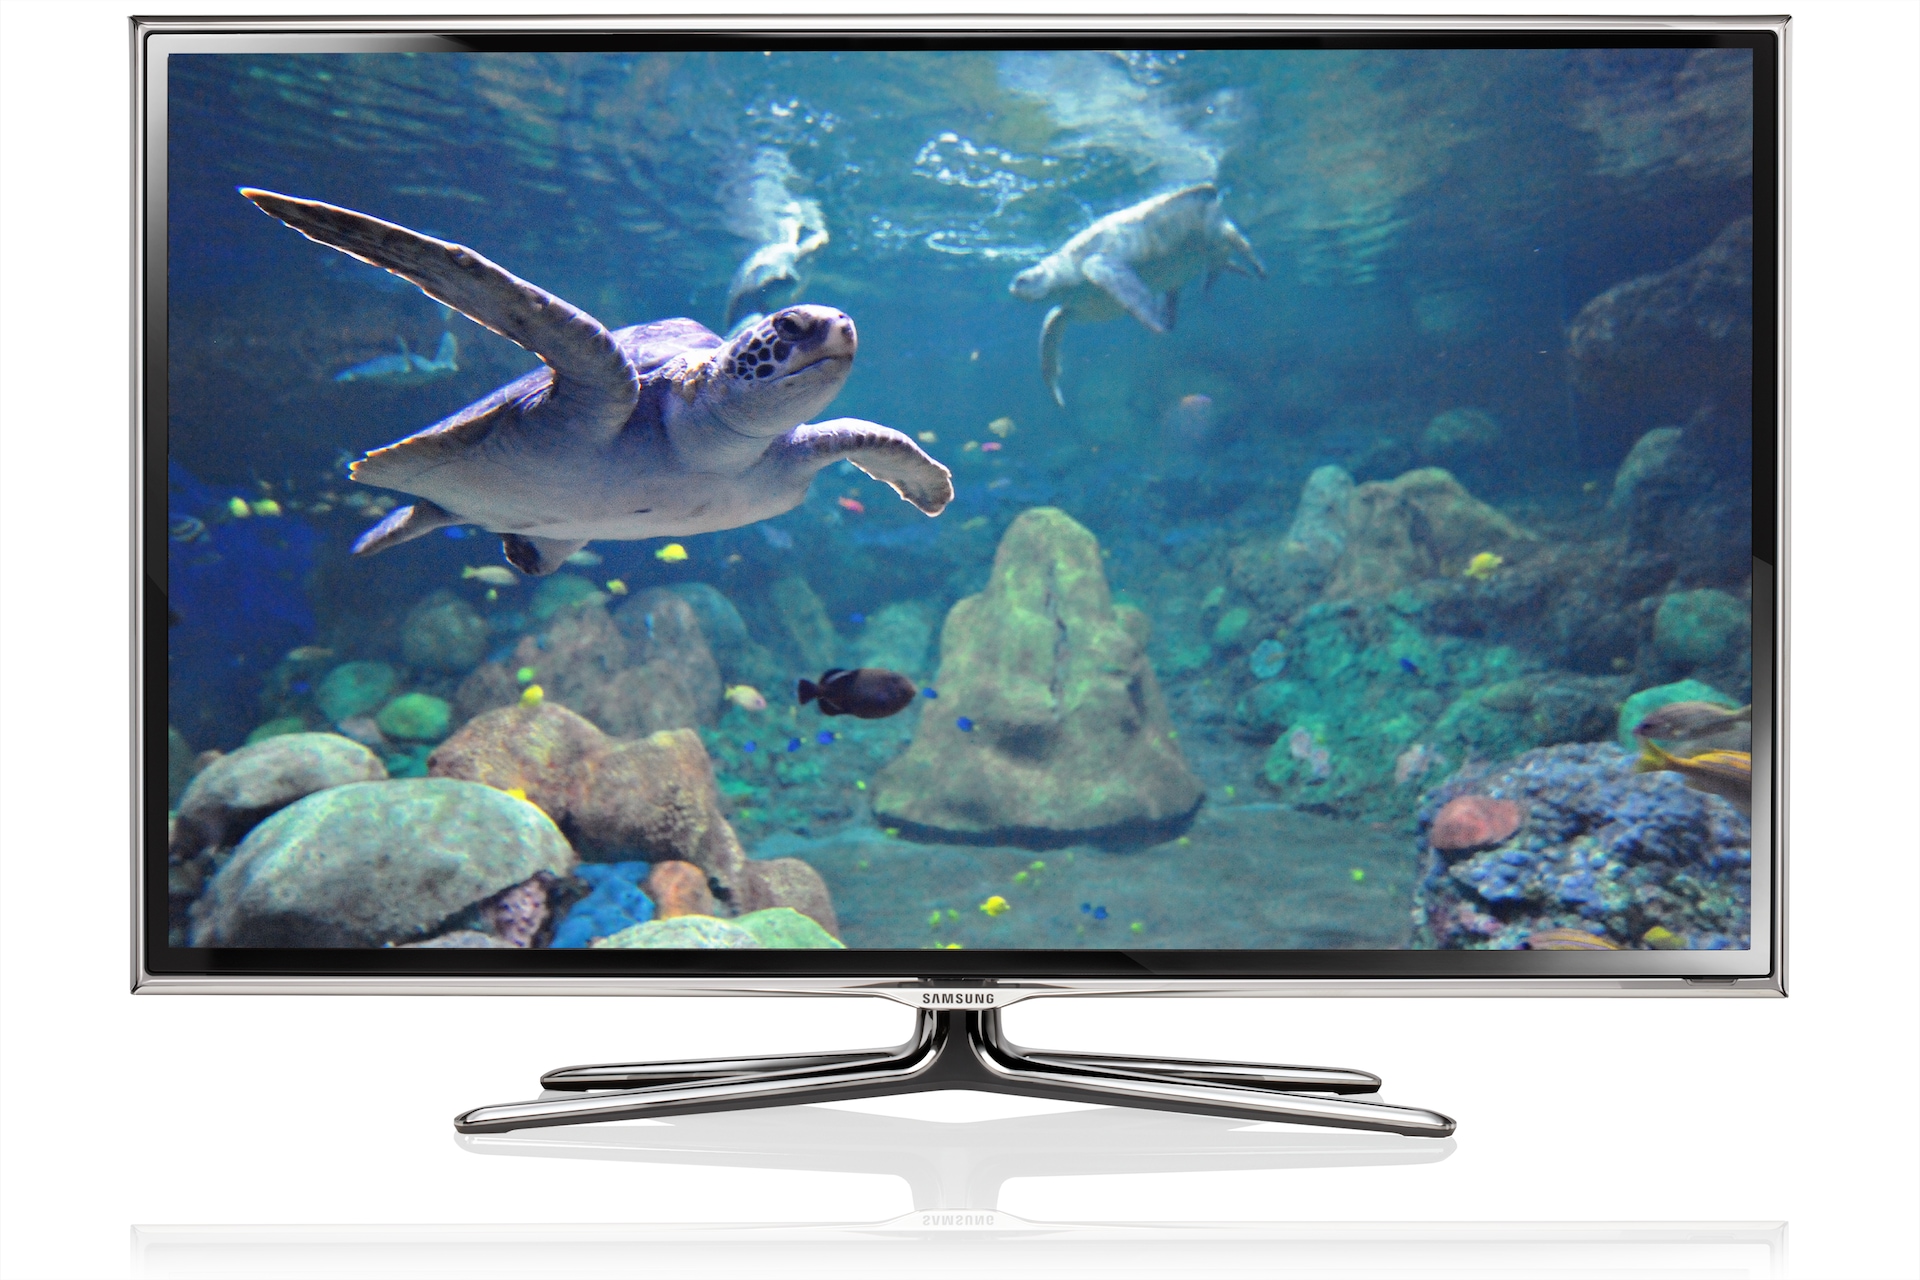 plafond terugvallen Hamburger 2012] UA46ES6600R Smart 46-Inch Full HD LED TV | Samsung Support Gulf